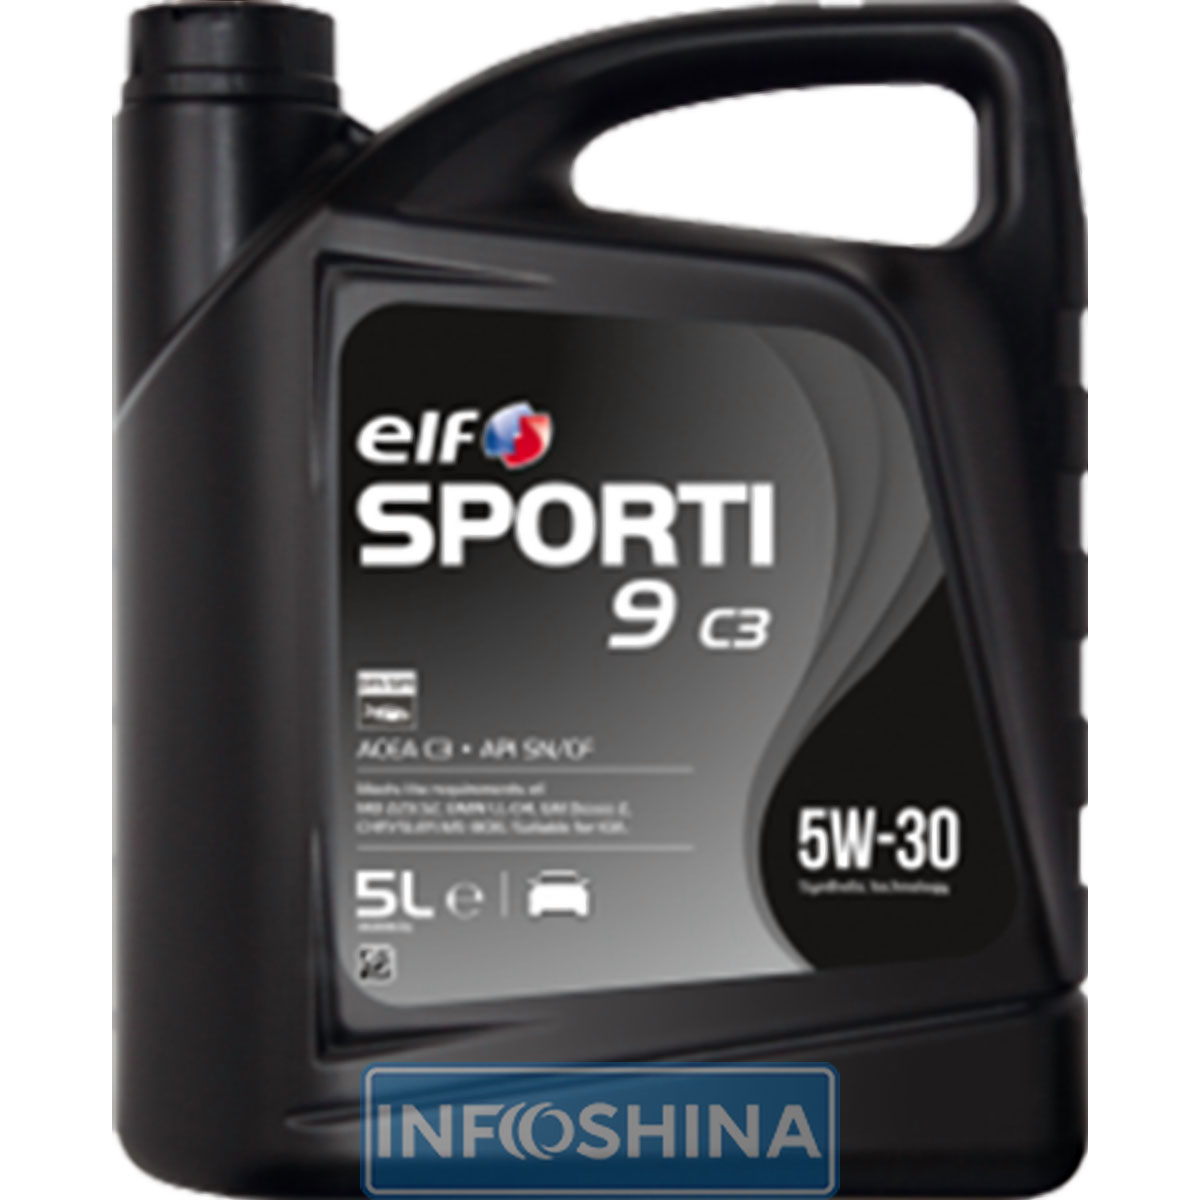 Купить масло ELF SPORTI 9 5W-30 C3 (5л)